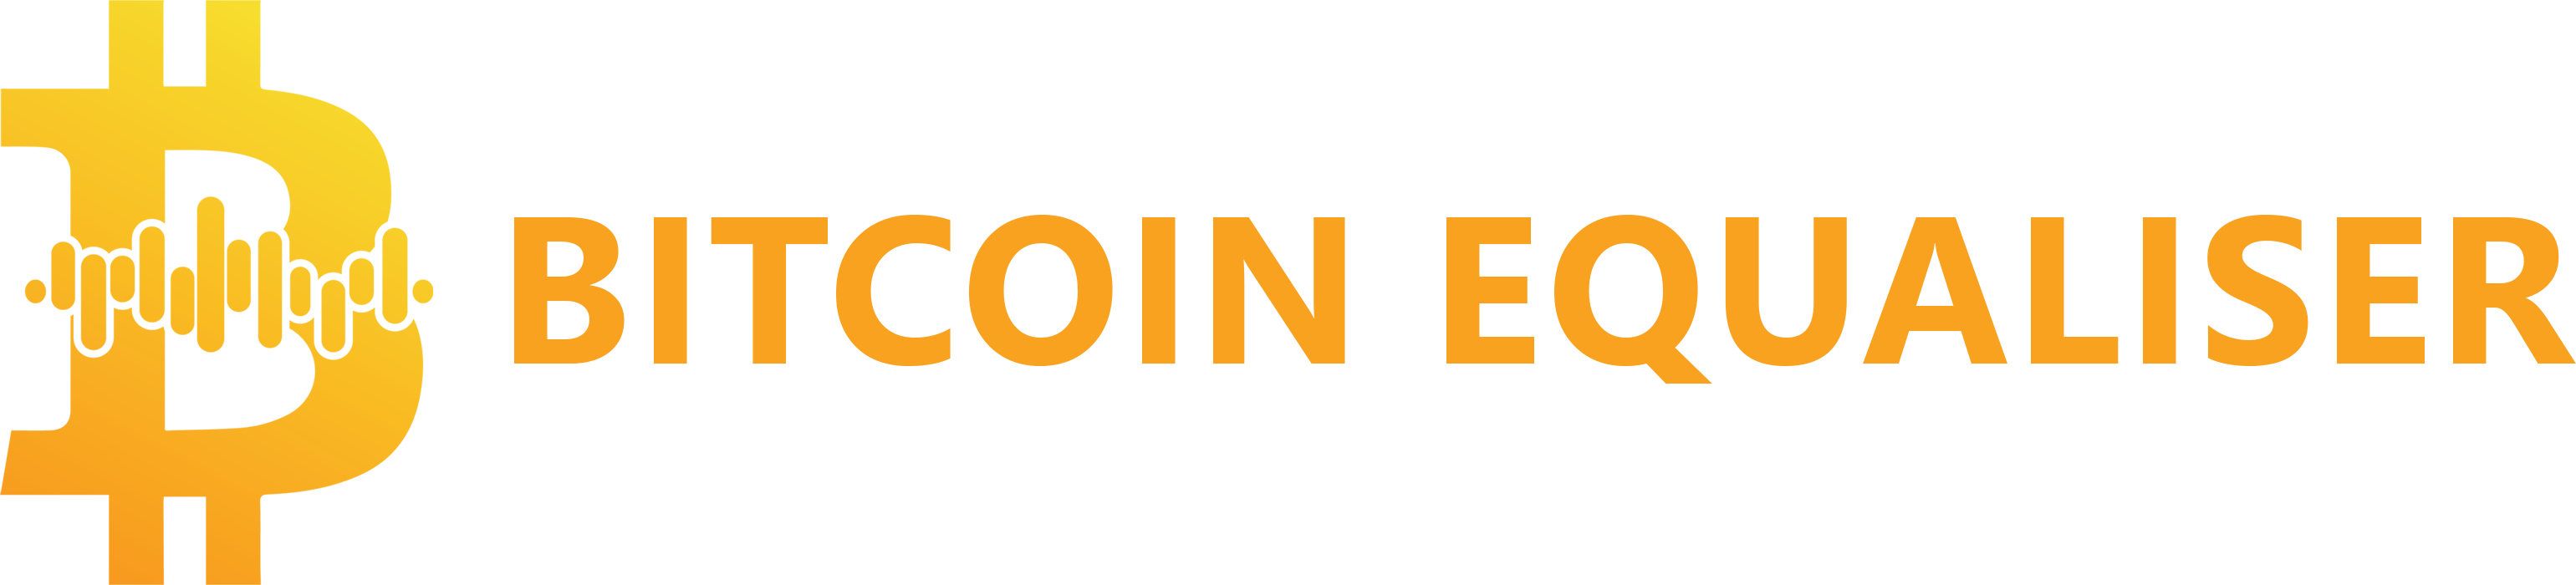 bitcoin equaliser logo